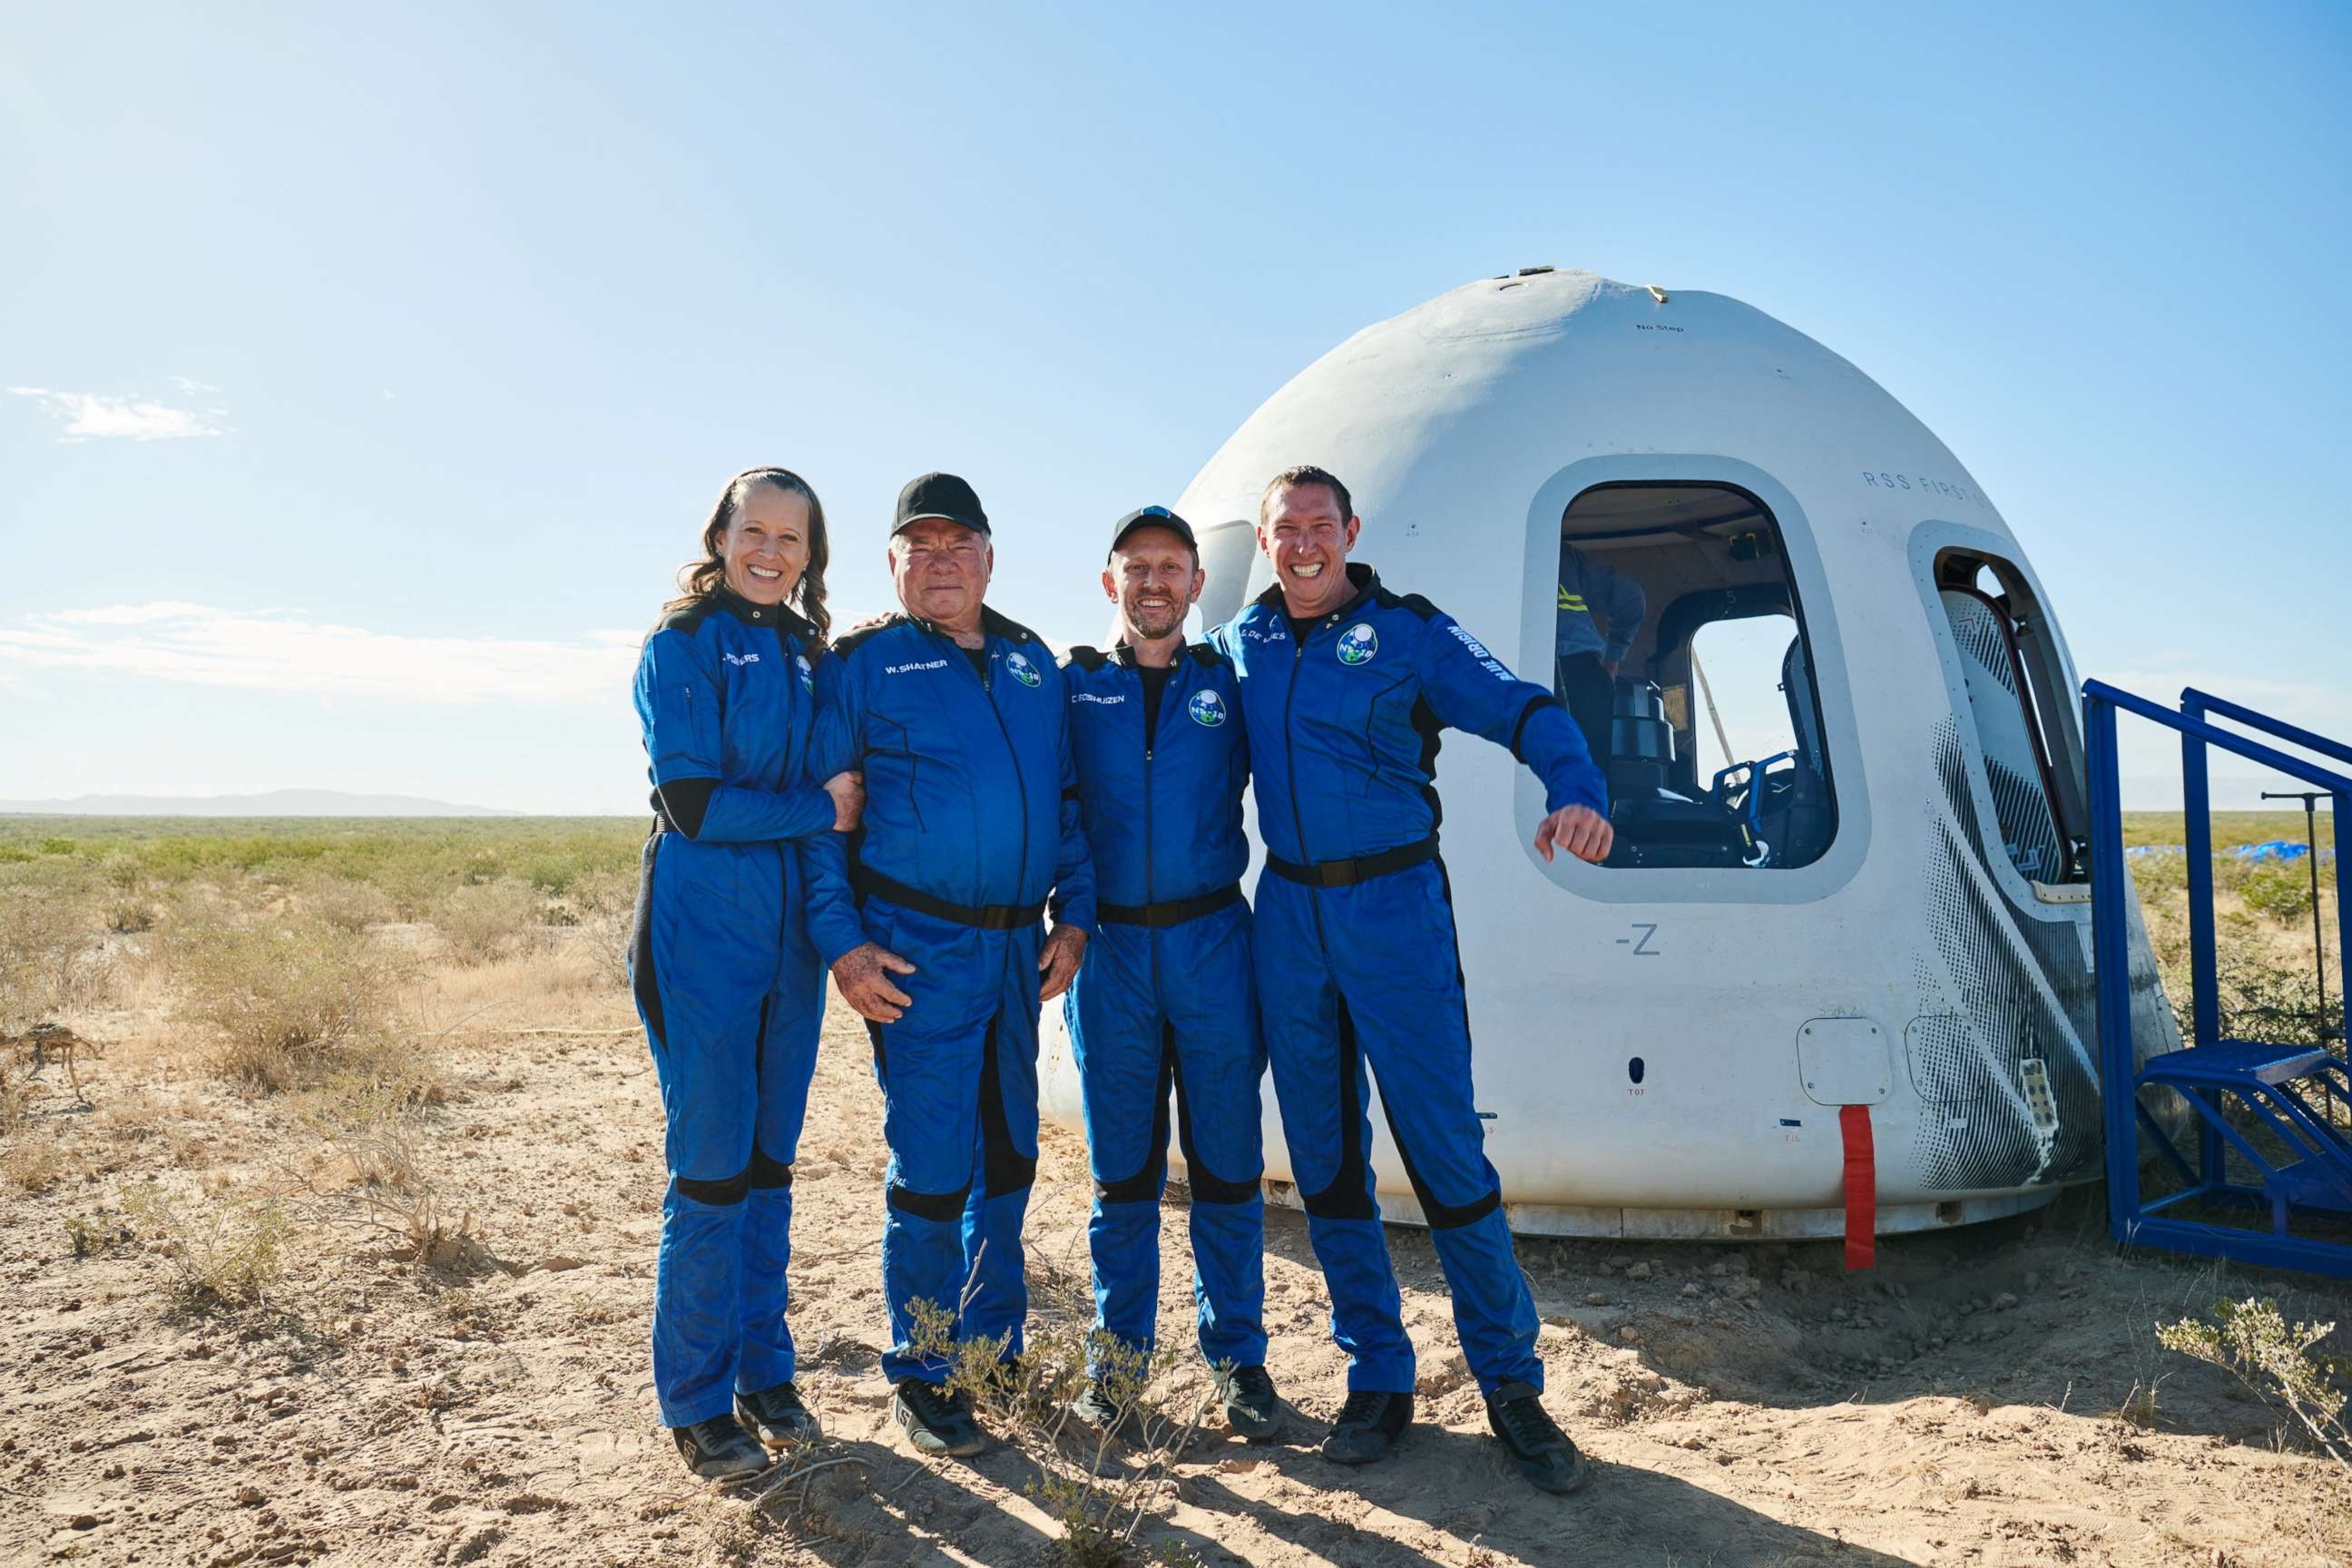 PHOTO: Star Trek actor William Shatner poses with Audrey Powers, Chris Boshuizen, and Glen de Vries after the capsule landing of the Blue Origin New Shepard mission NS-18 suborbital flight near Van Horn, Texas, Oct. 13, 2021.